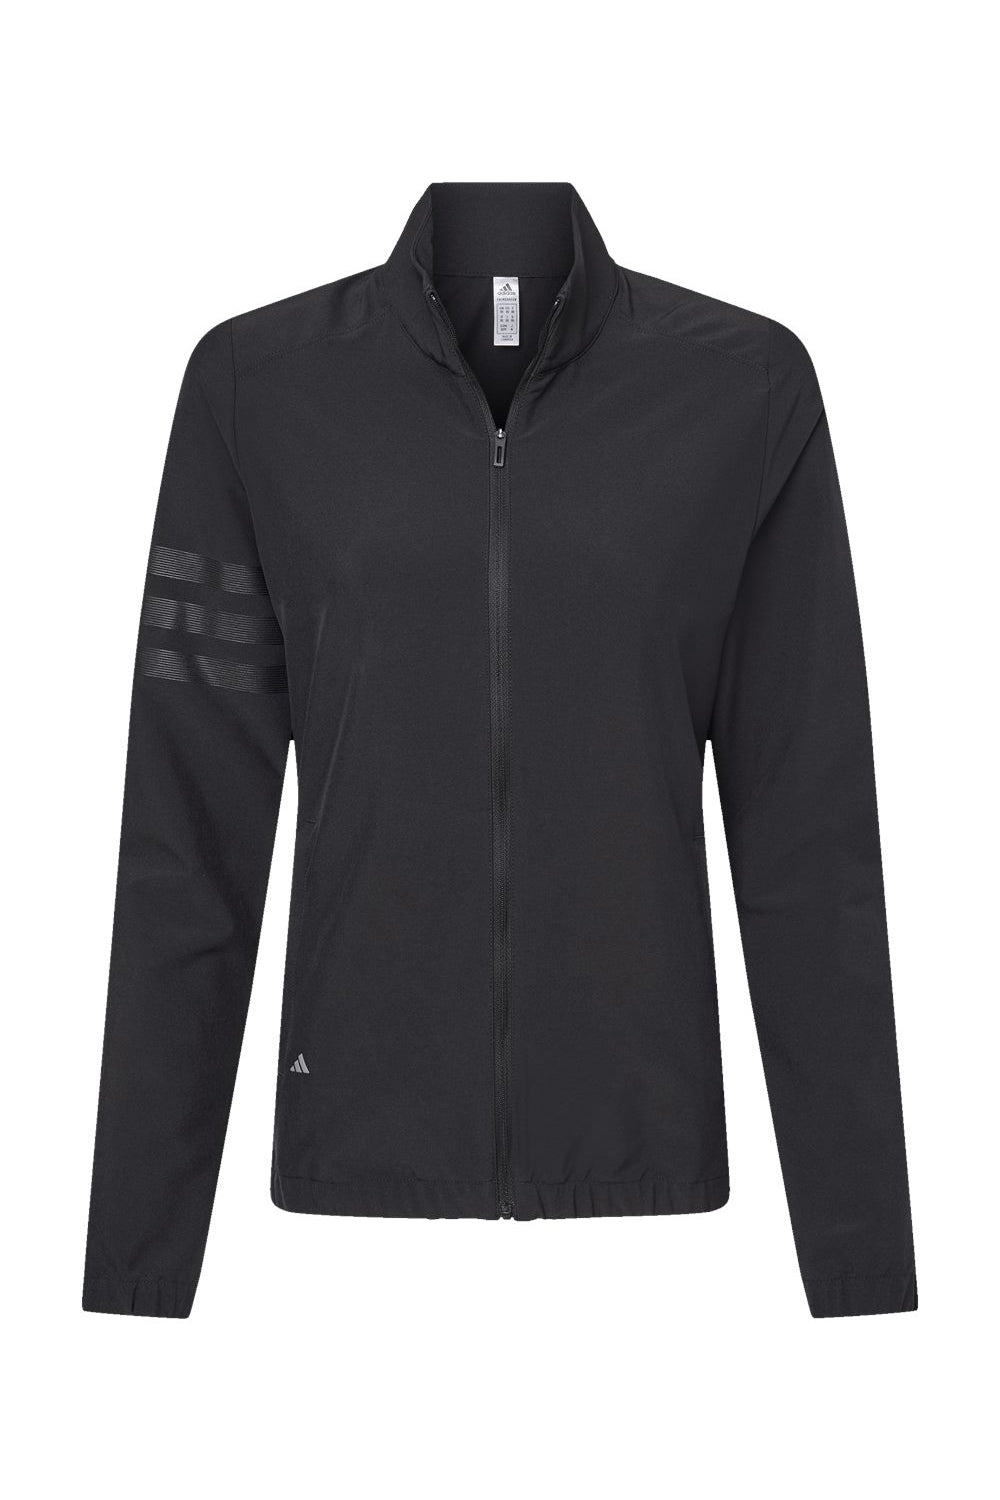 Adidas A268 Womens 3 Stripes Full Zip Jacket Black Flat Front